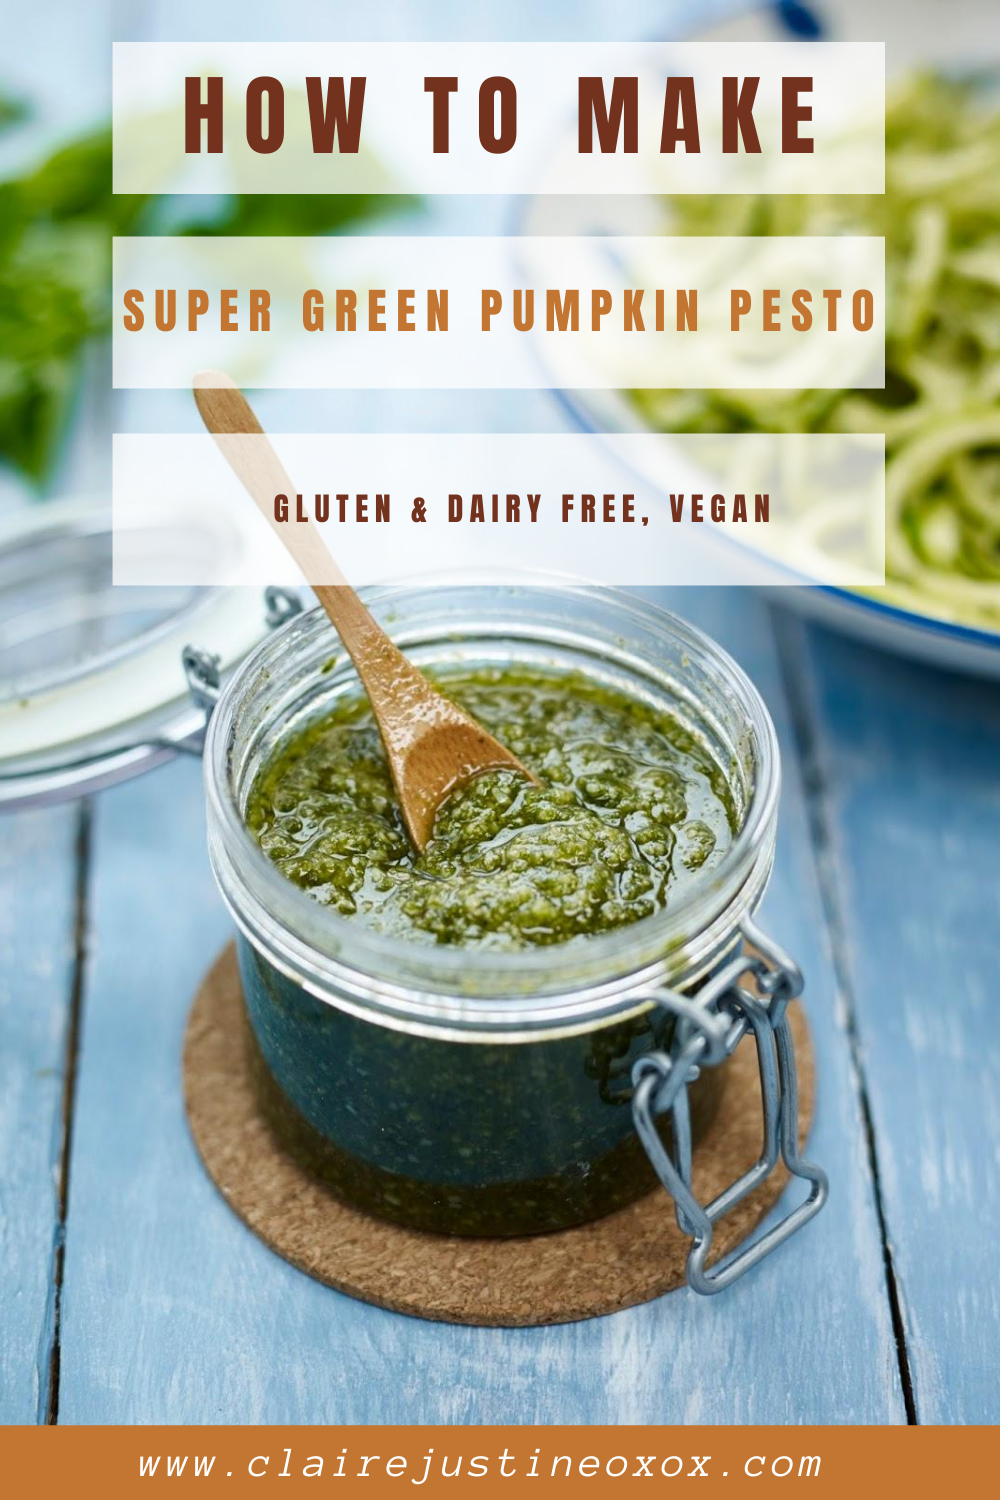 Super Green Pumpkin Pesto: Gluten & Dairy Free, Vegan